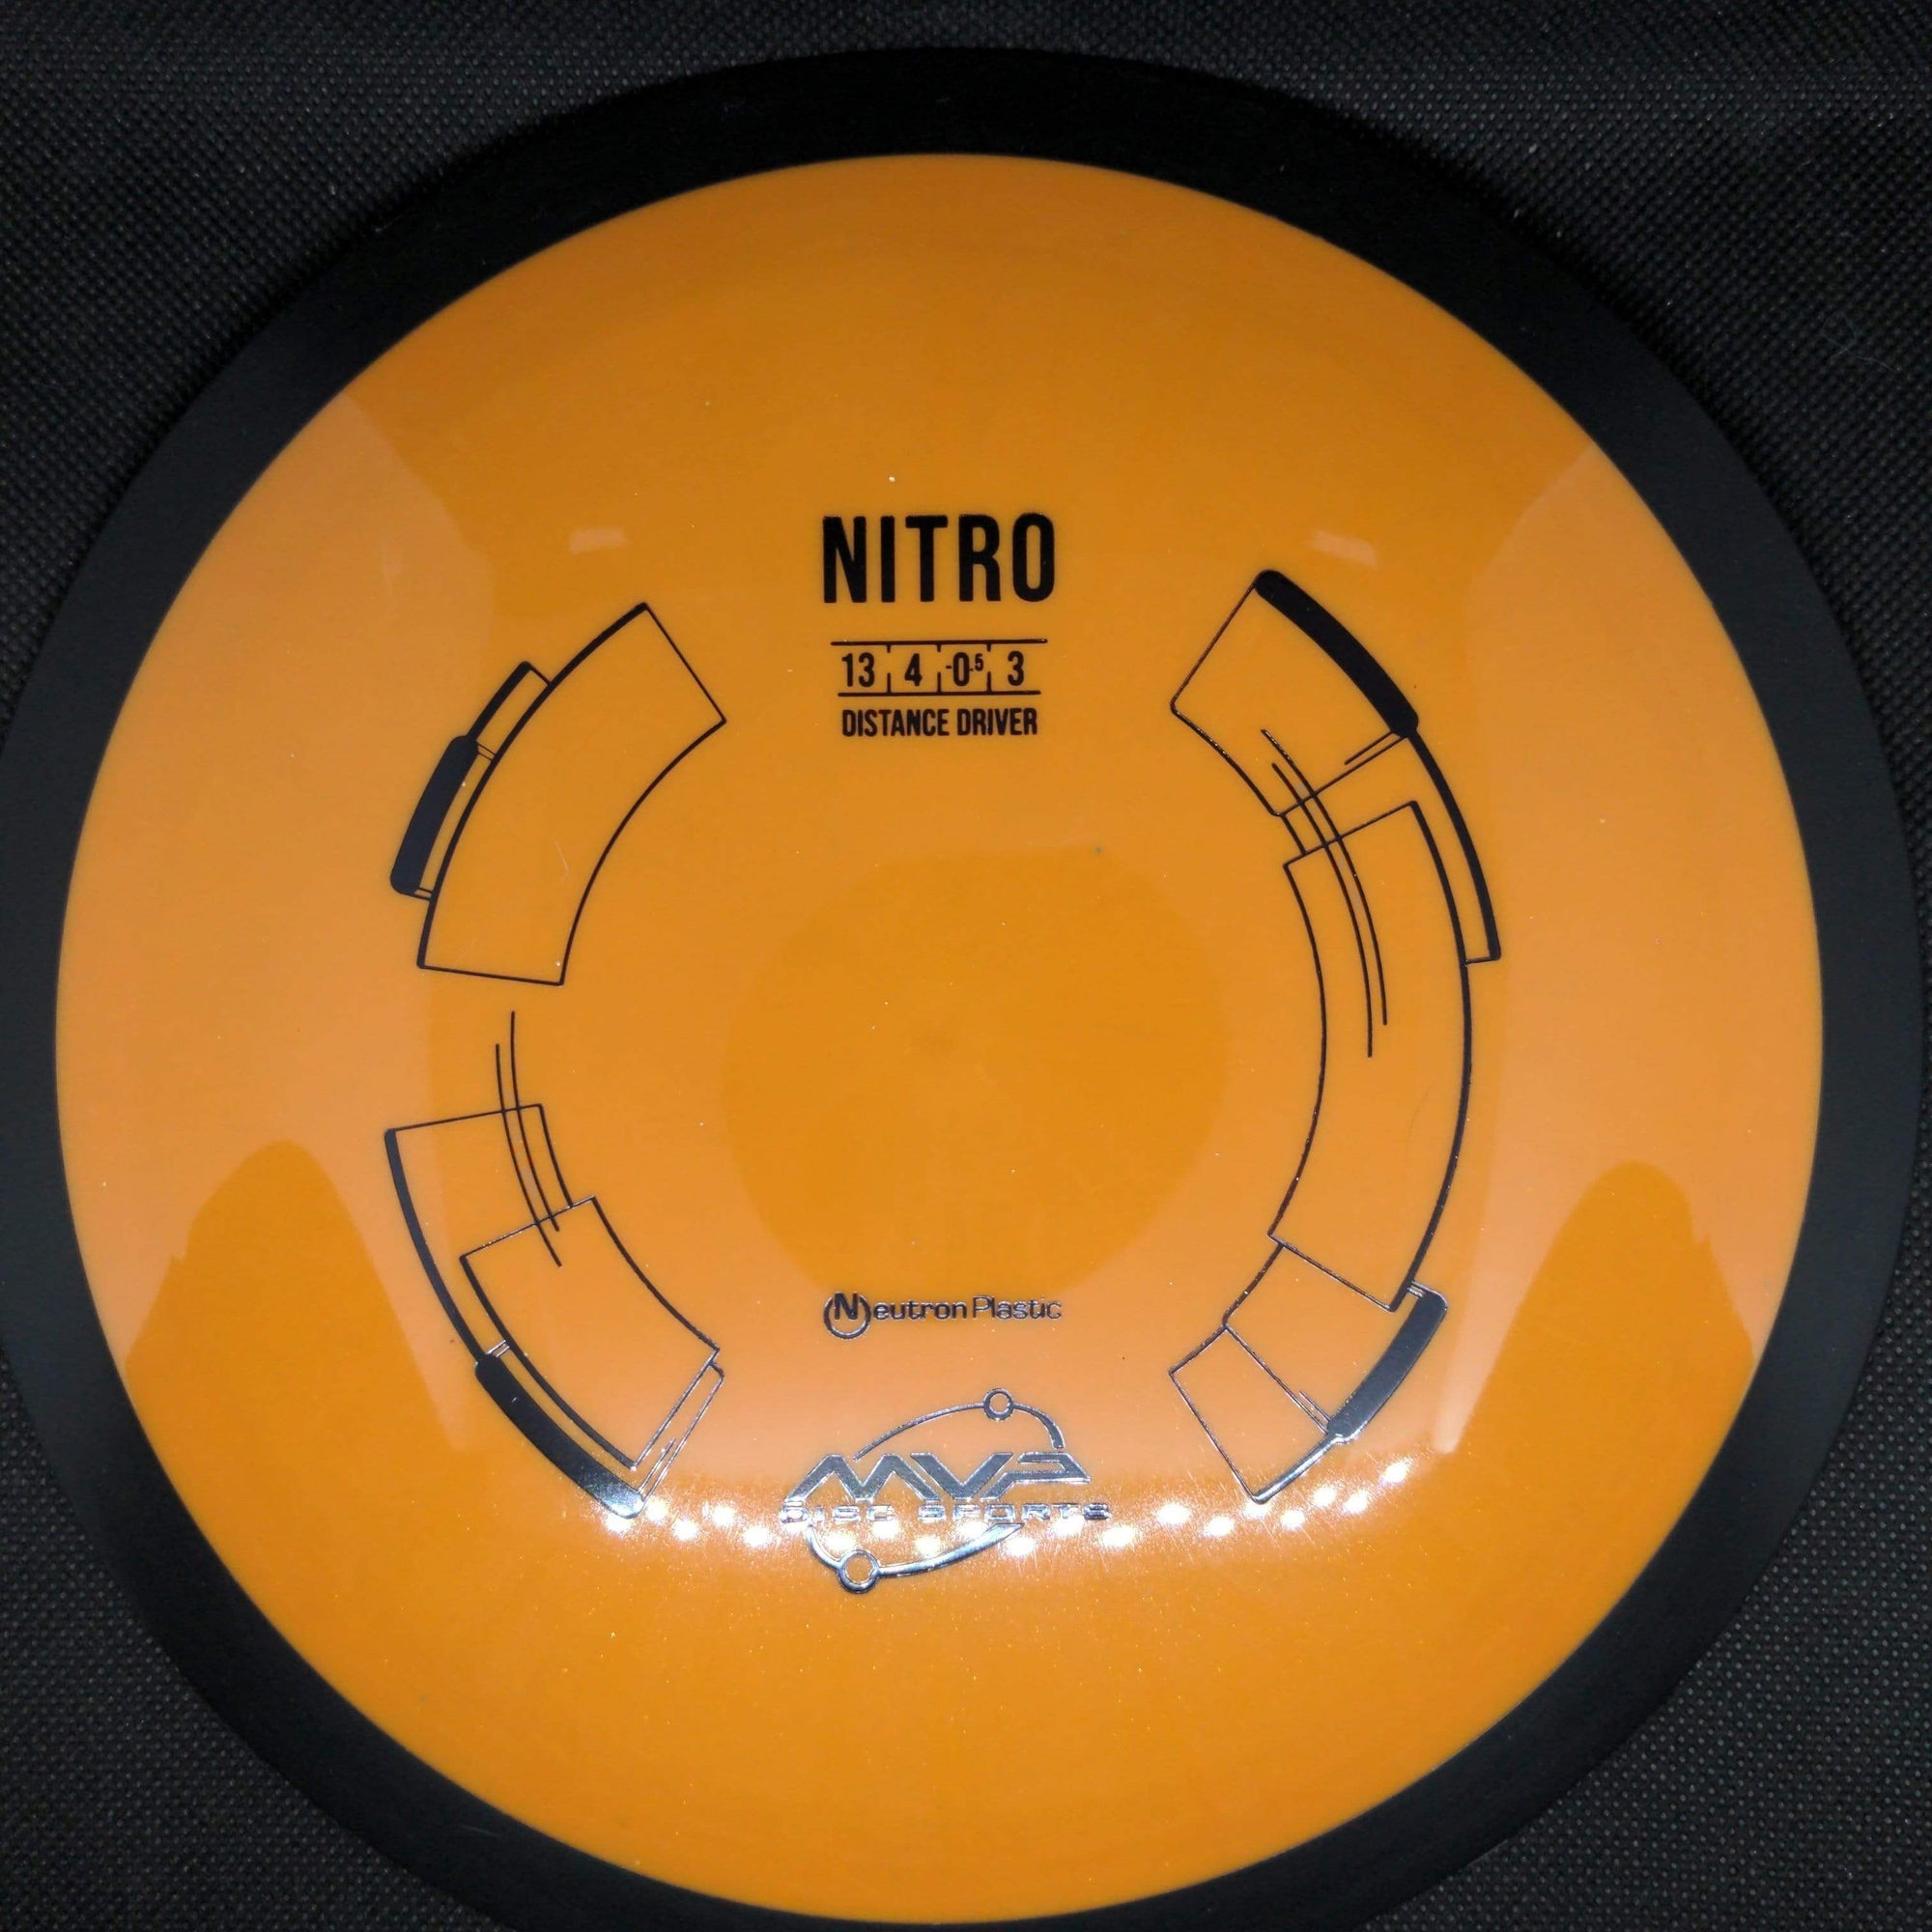 MVP Distance Driver Burnt Orange Black Rim 173g Neutron Nitro